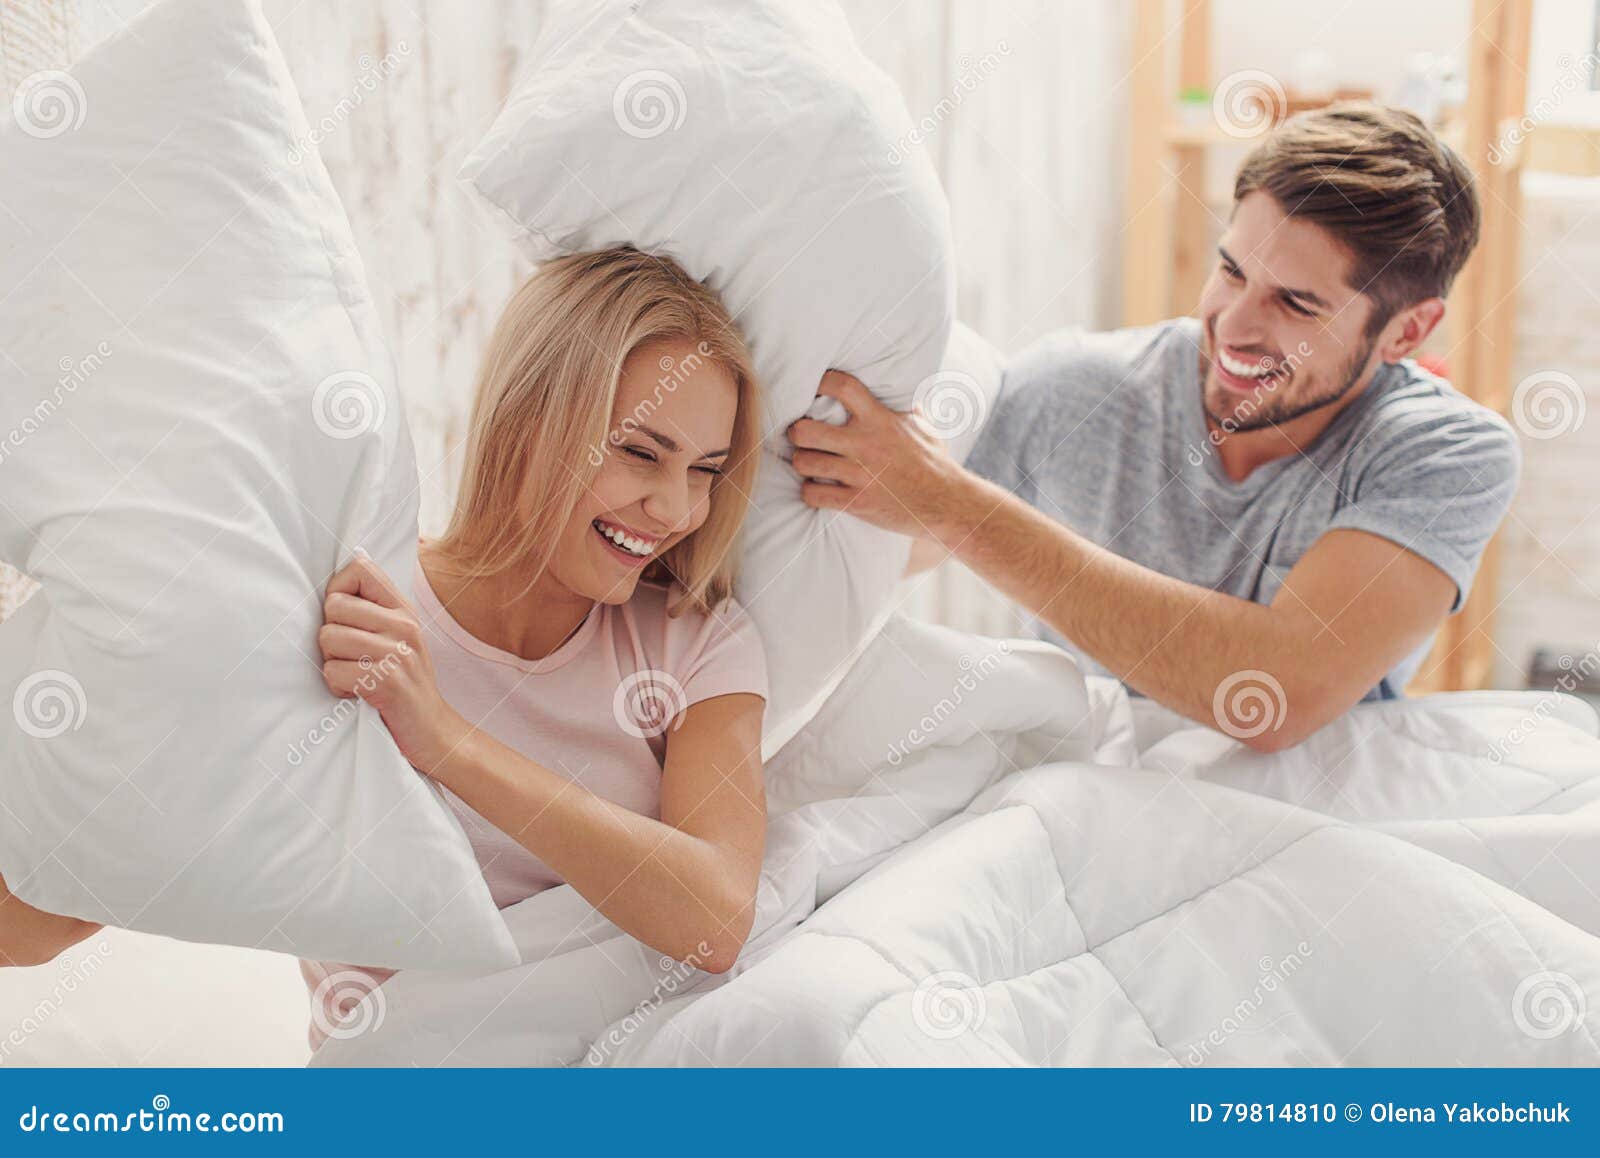 Carefree Loving Couple Having Fun With Cushions Stock Photo Image Of